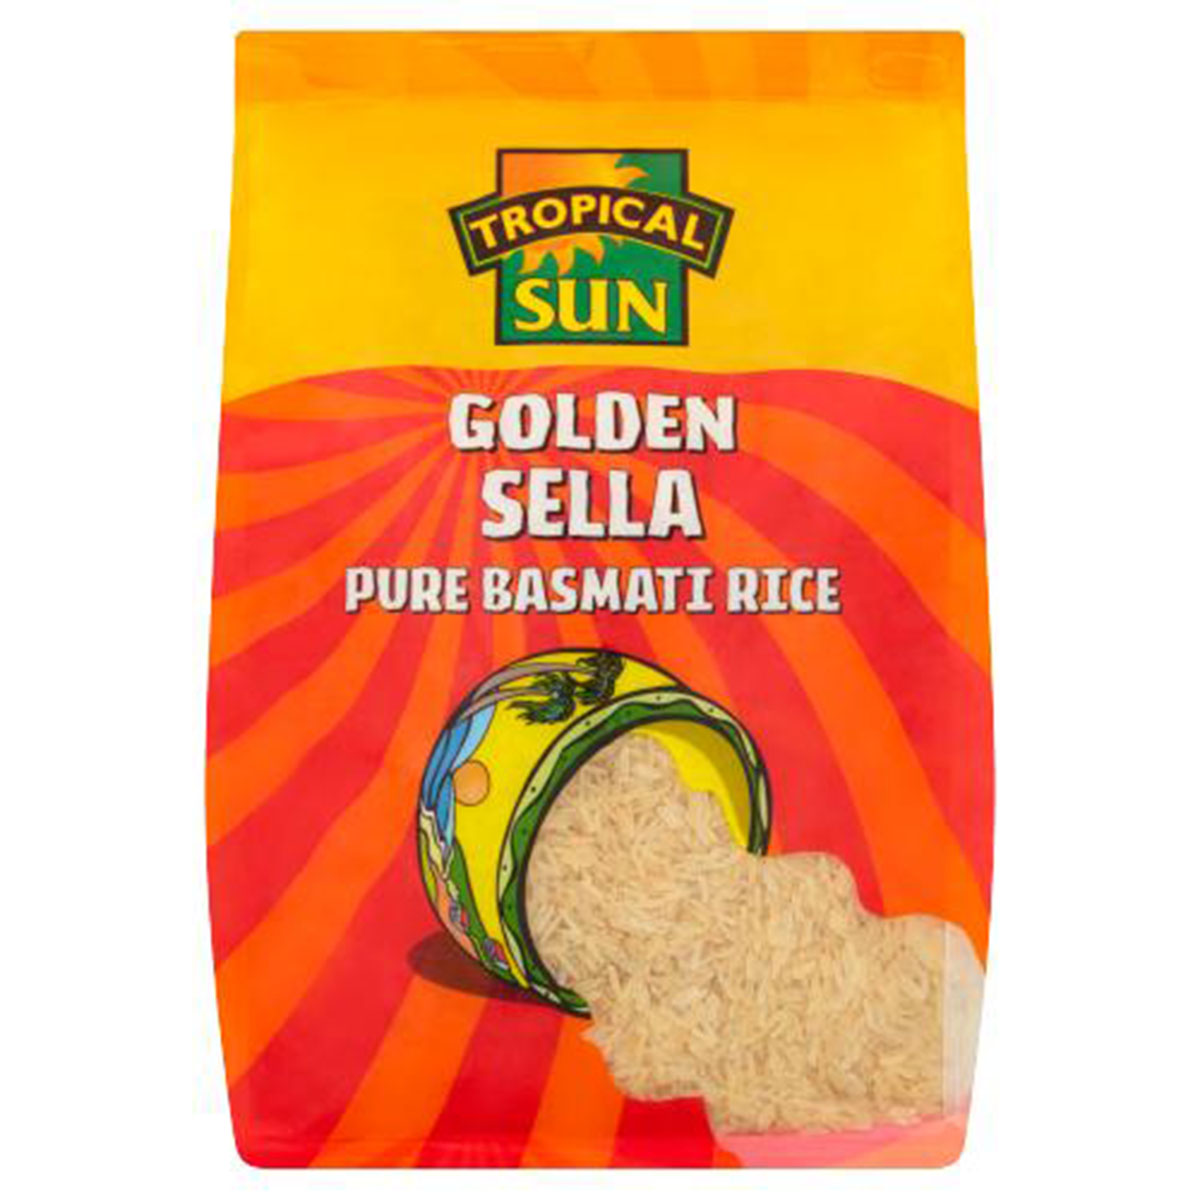 Tropical Sun - Golden Sella Basmati Rice - 2kg - Continental Food Store